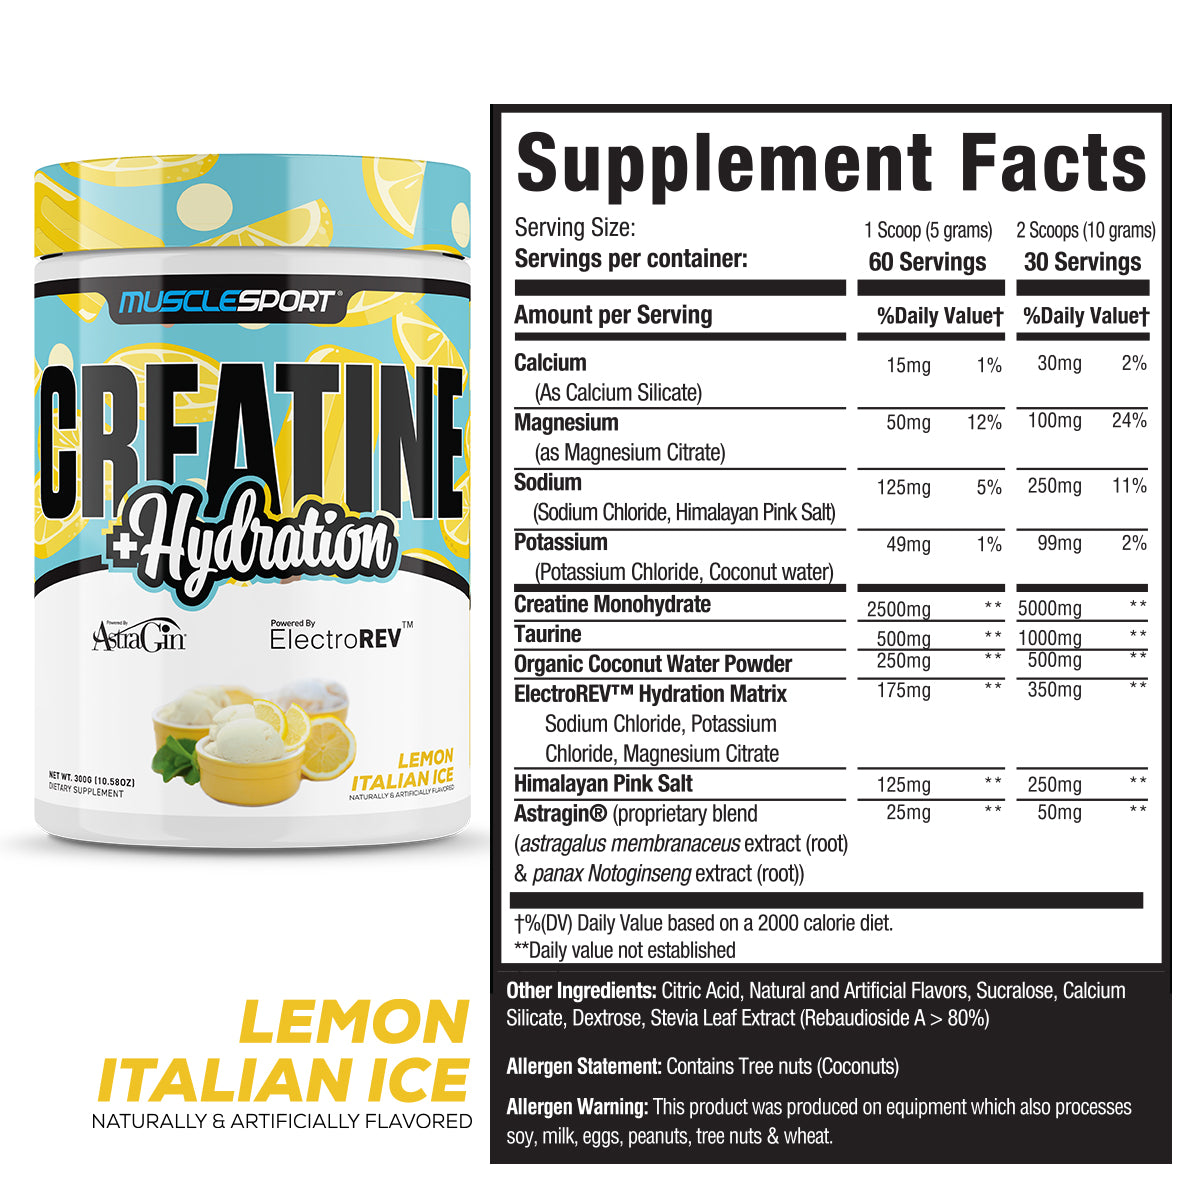 Muscle Sport Creatine Hydration Lemon Italian Ice Supplement